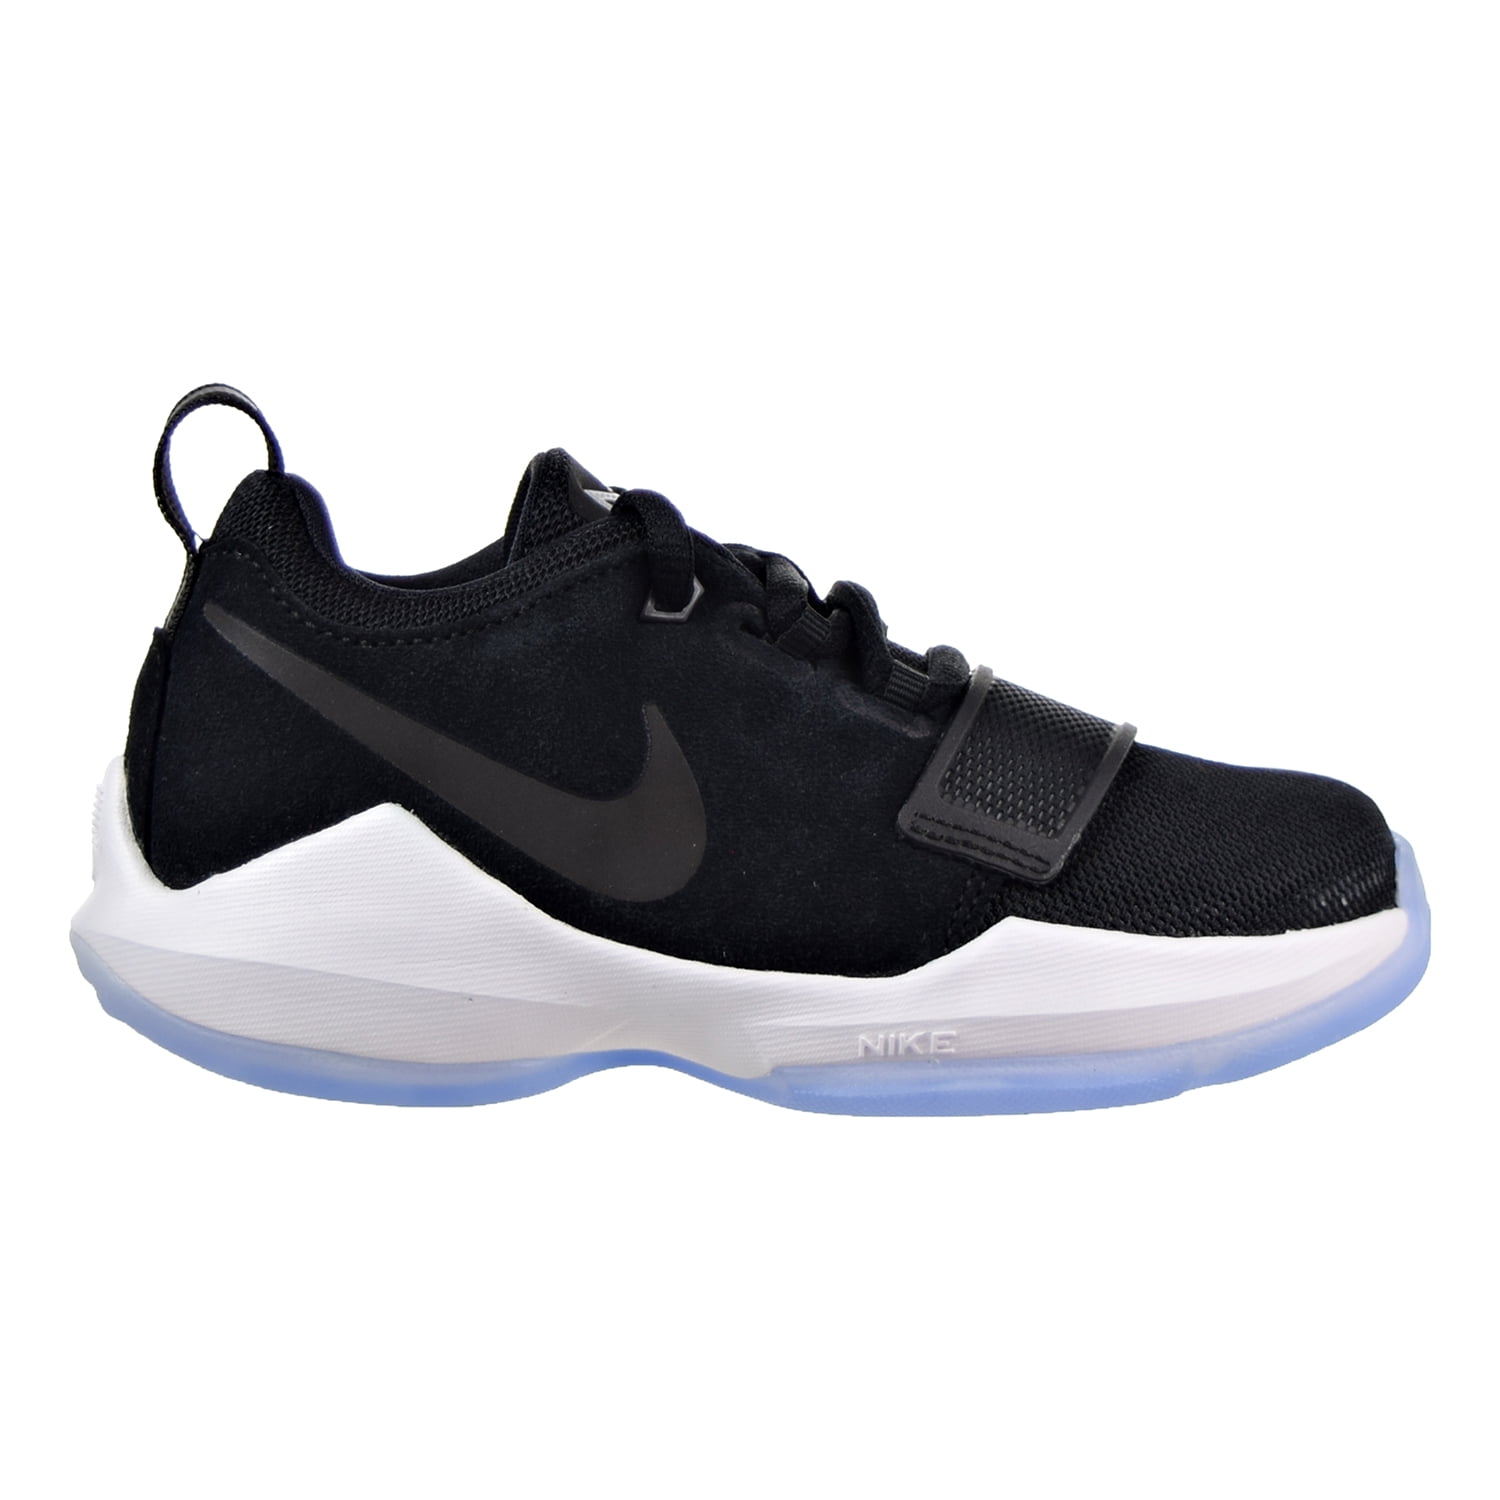 Nike PG 1 Little (PS) Basketball Shoes Black/White/Hyper Turquoise 881938-001 - Walmart.com